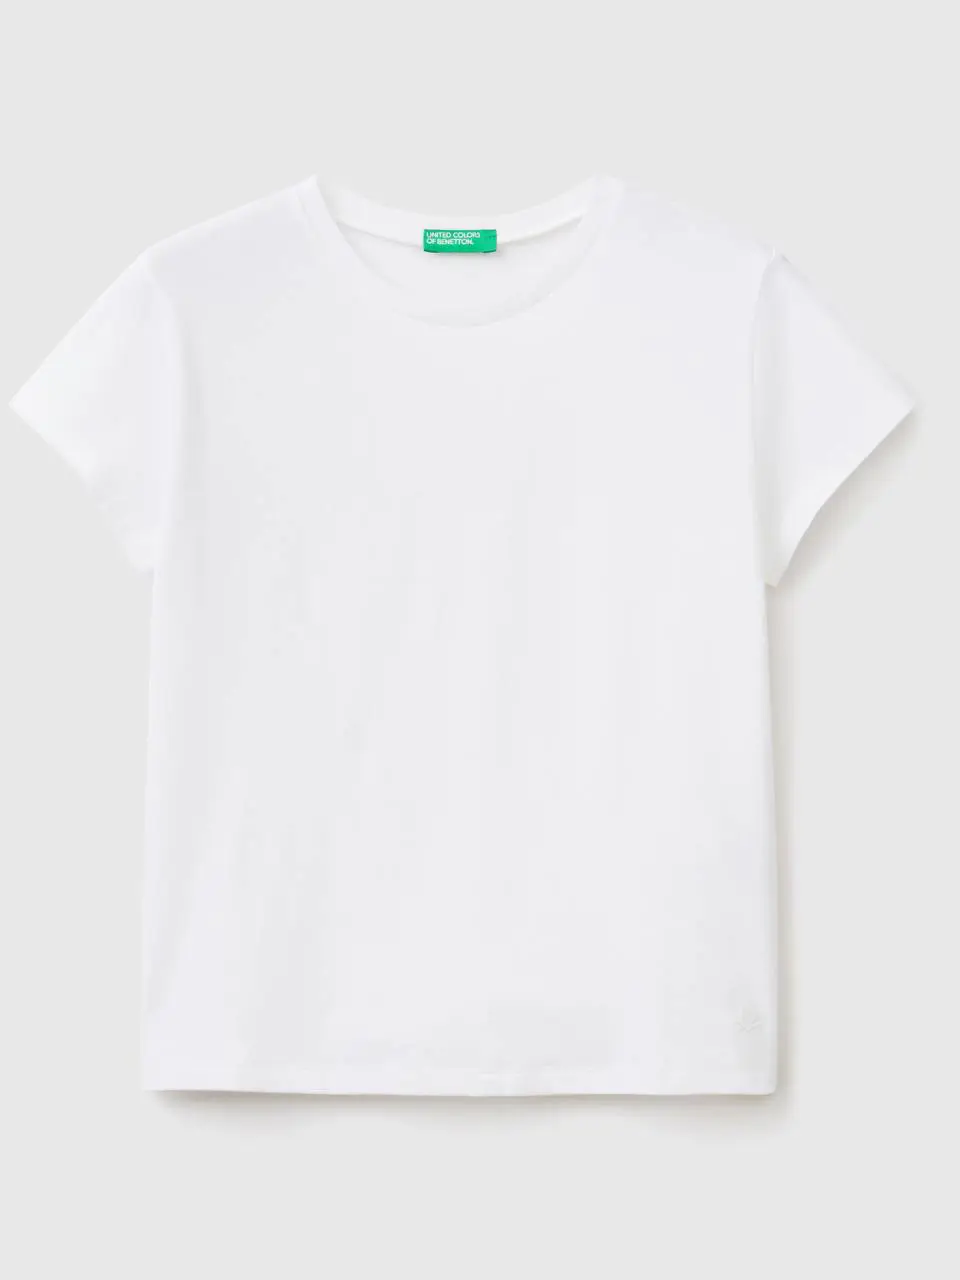 Benetton t-shirt in pure organic cotton. 1